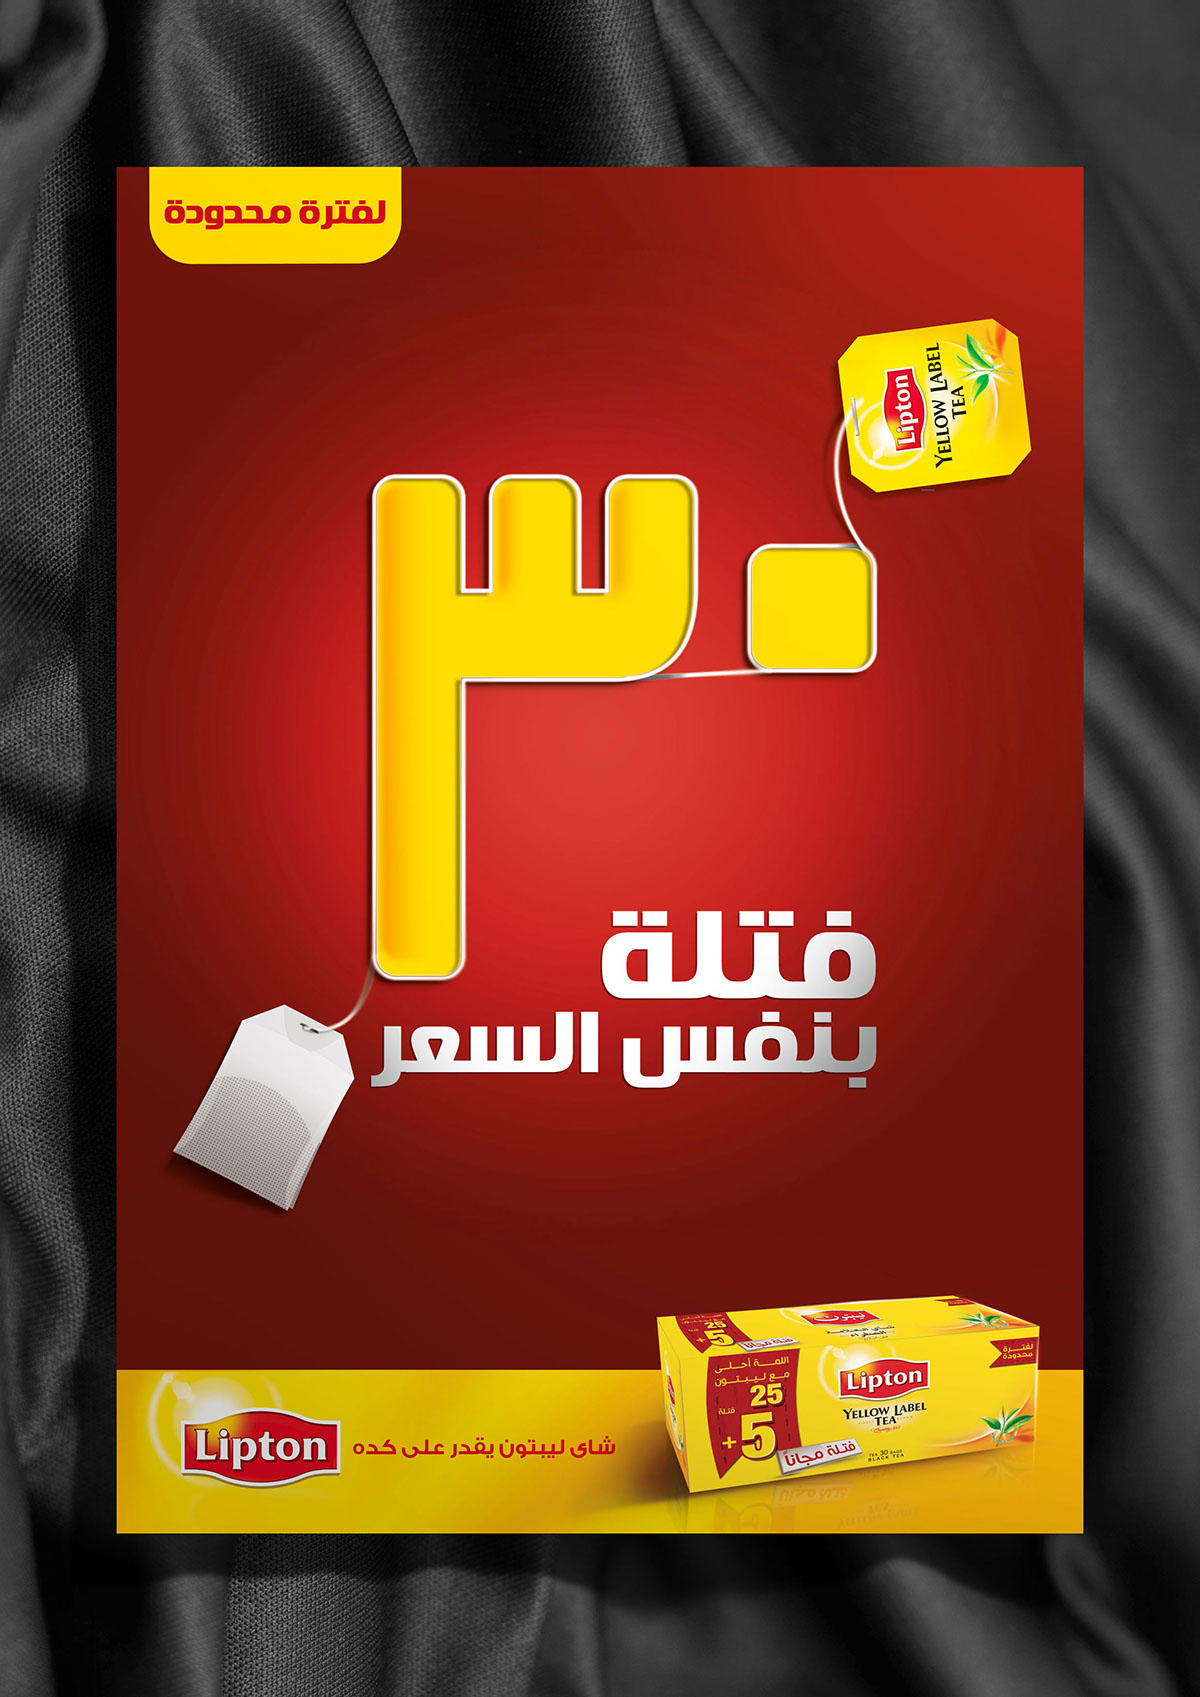 Lipton ramy Unilever tea pos creative concept retouch egypt Sudan green tea drink milk poster packaging design ramy mohamed